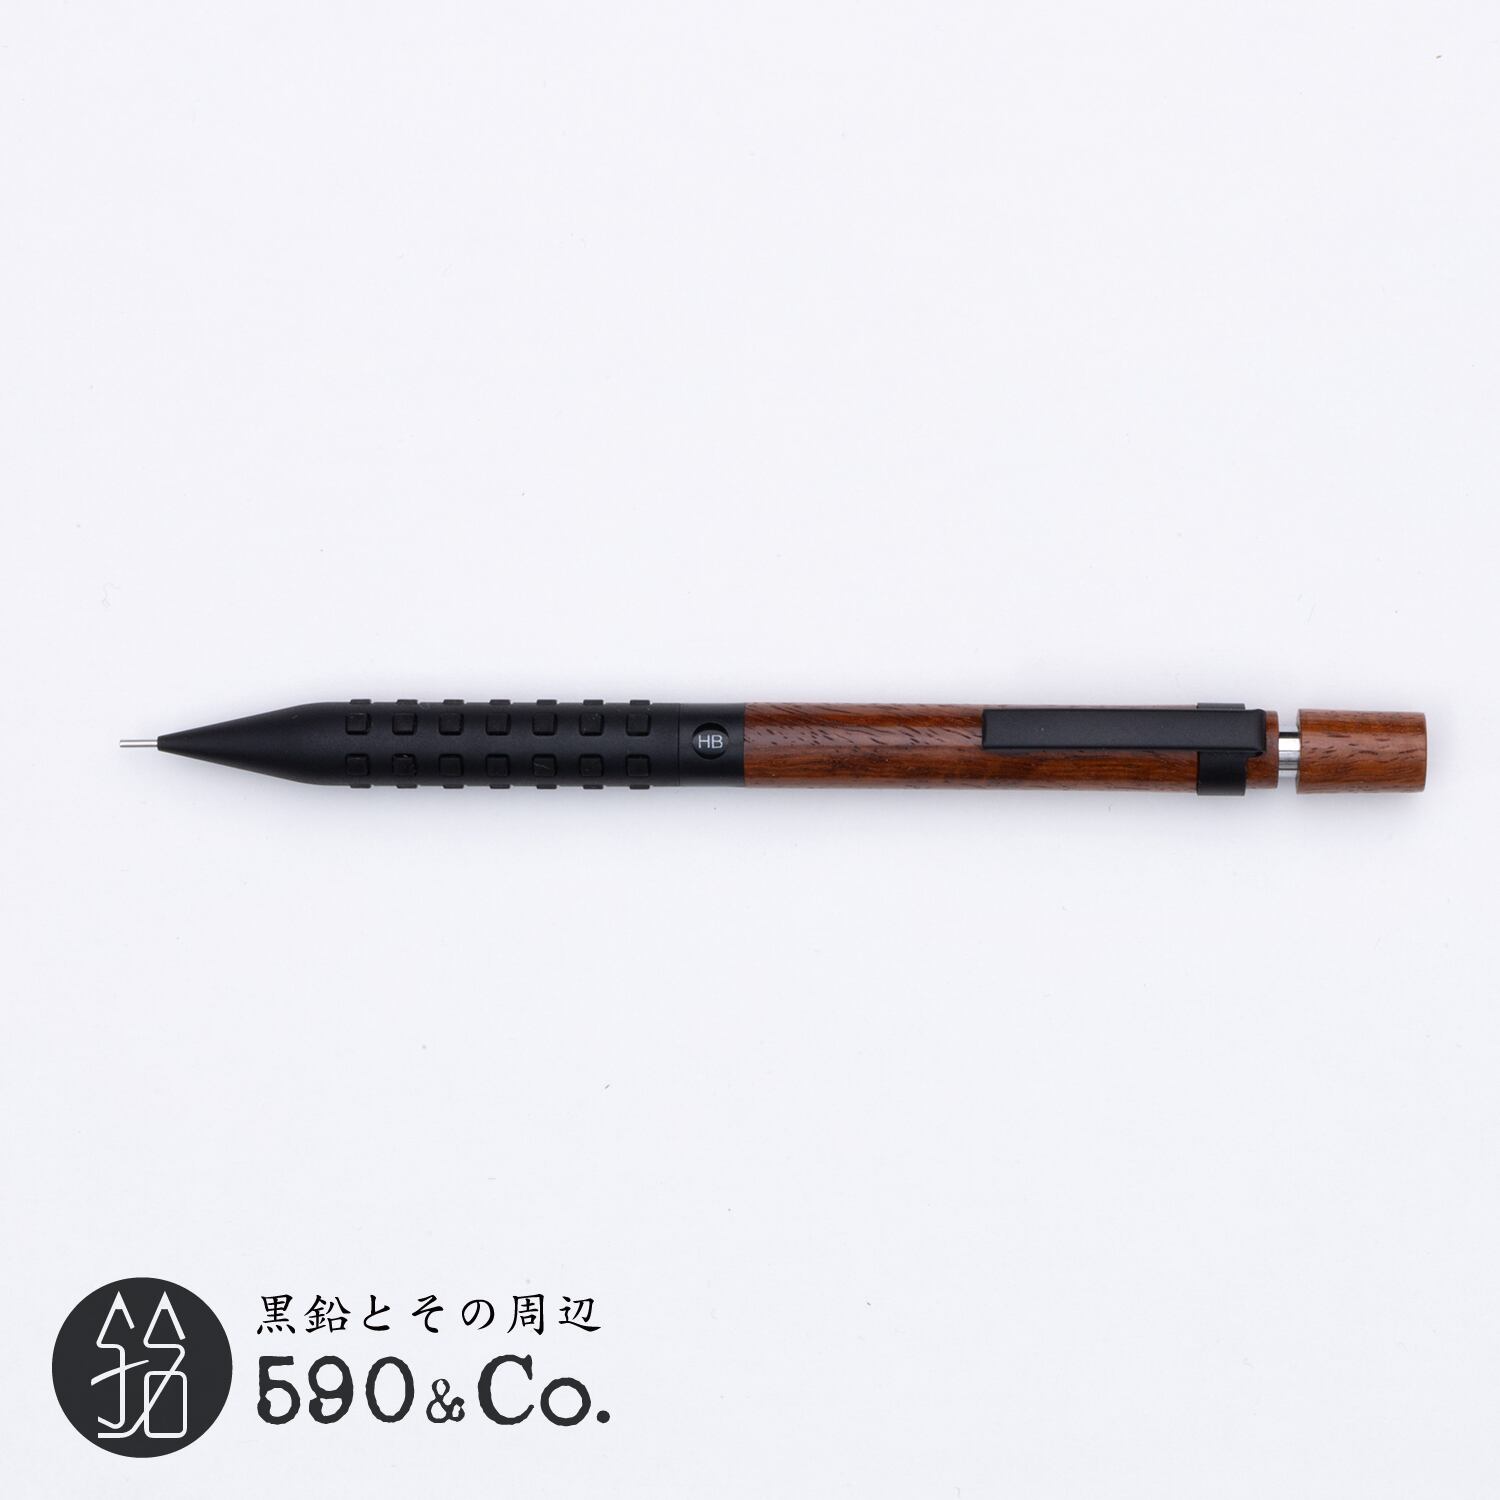 ALINA penmaker】木軸スマッシュ (花梨杢) | 590&Co.